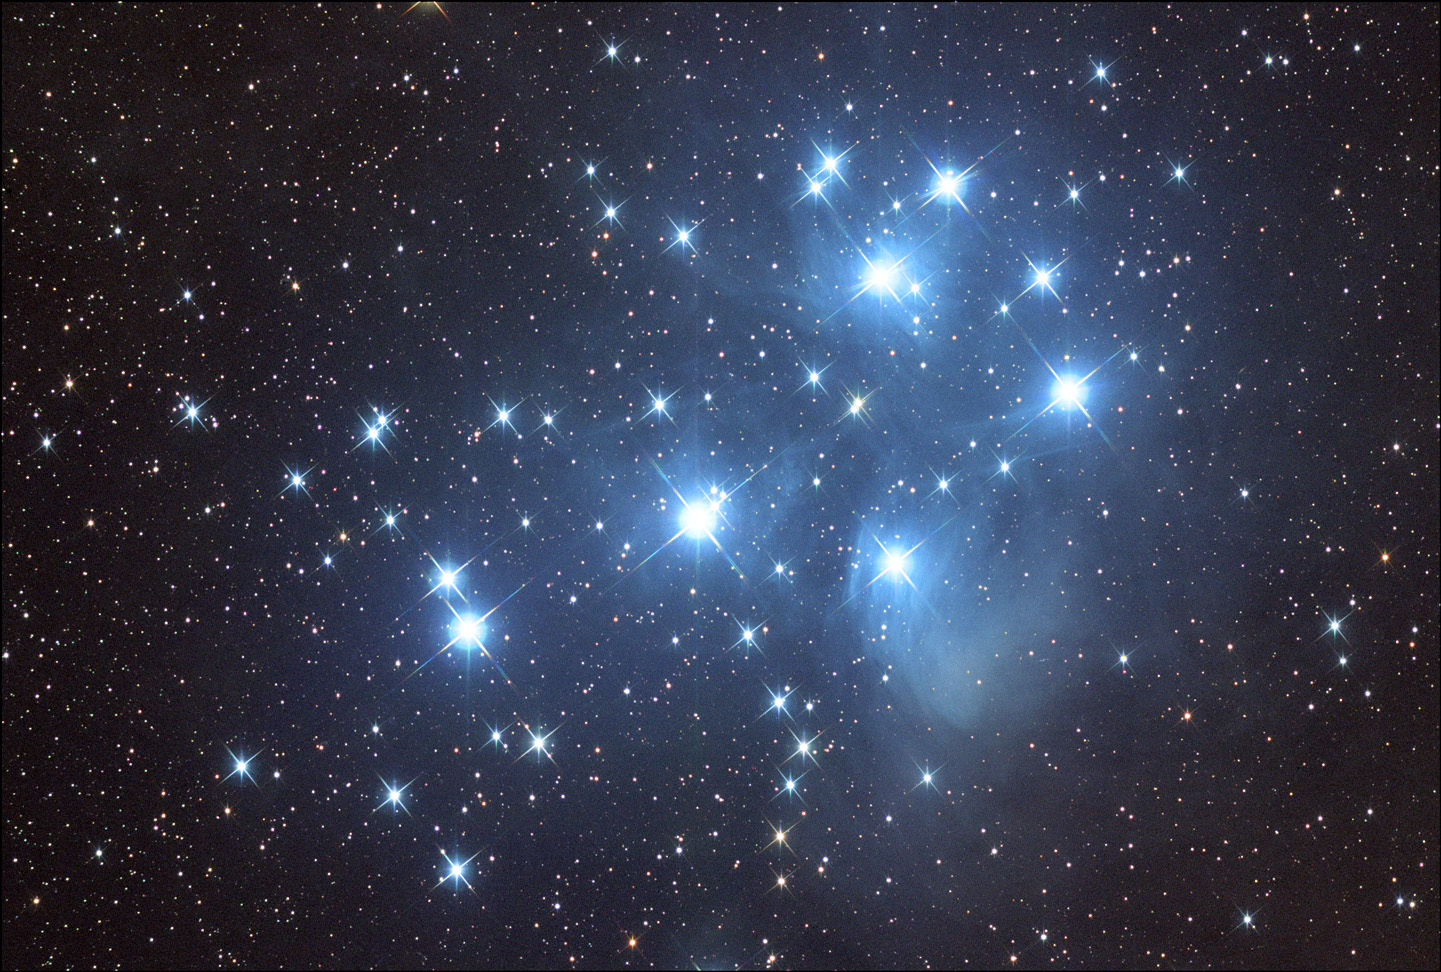 The Pleiades, M45